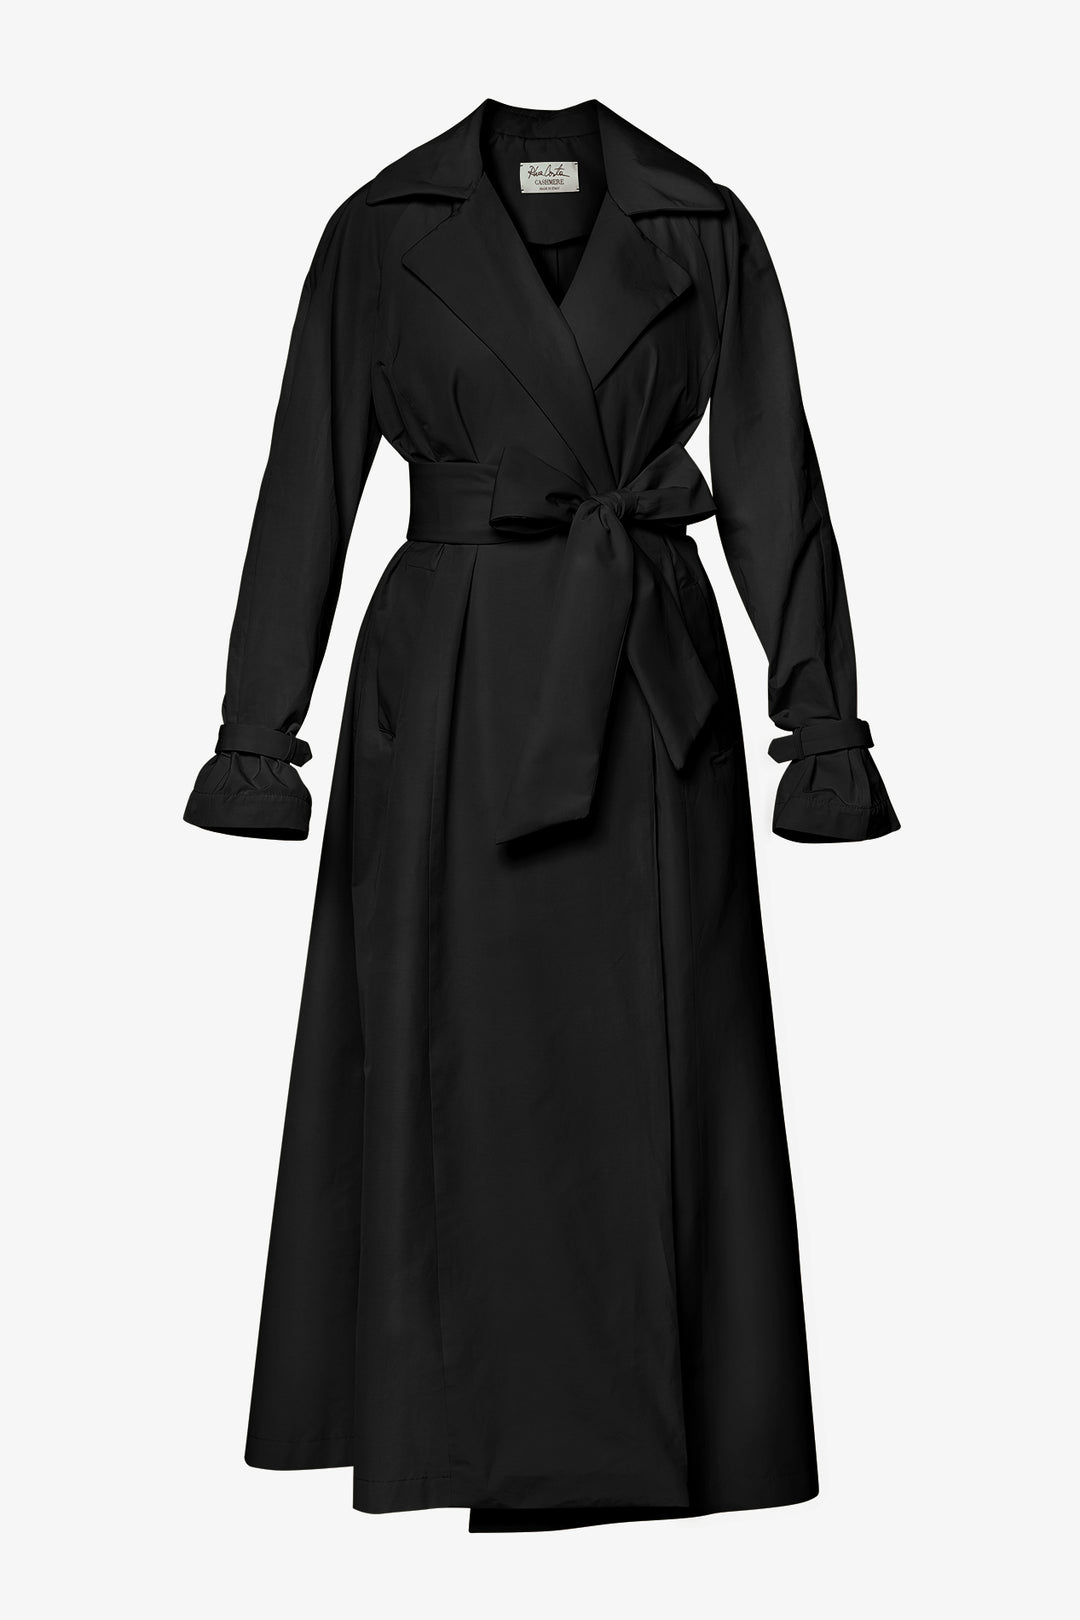 Marlene Black Trench Coat